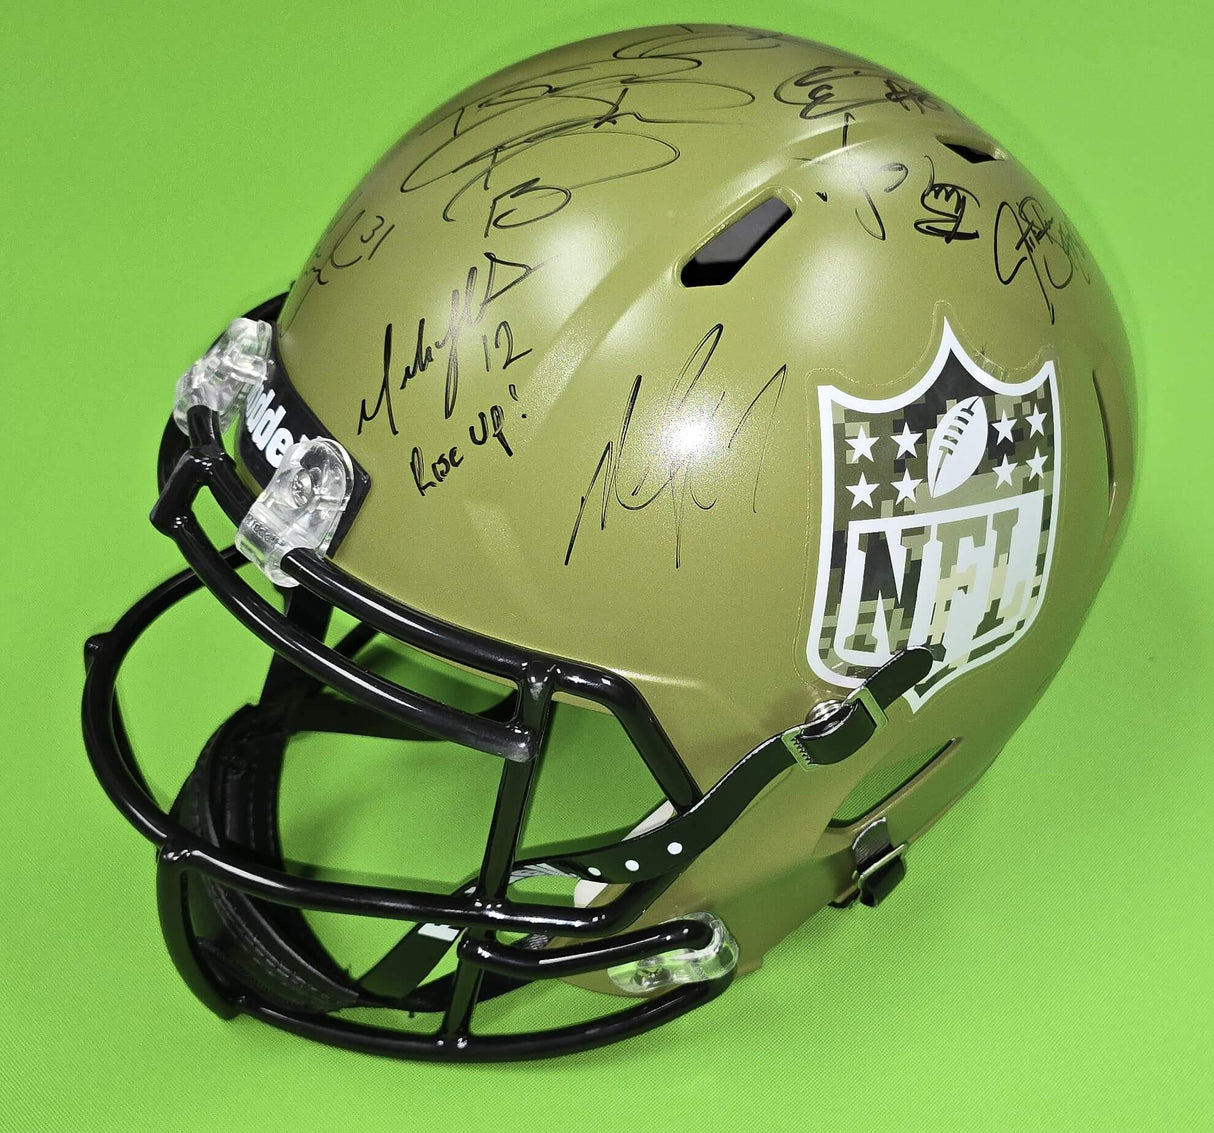 Hicks, Pryor, Landry, Stewart, Vick, Ebron, Avril Autographed NFL Salute To Service Replica Eclipse Speed Full-Size Helmet (Beckett)